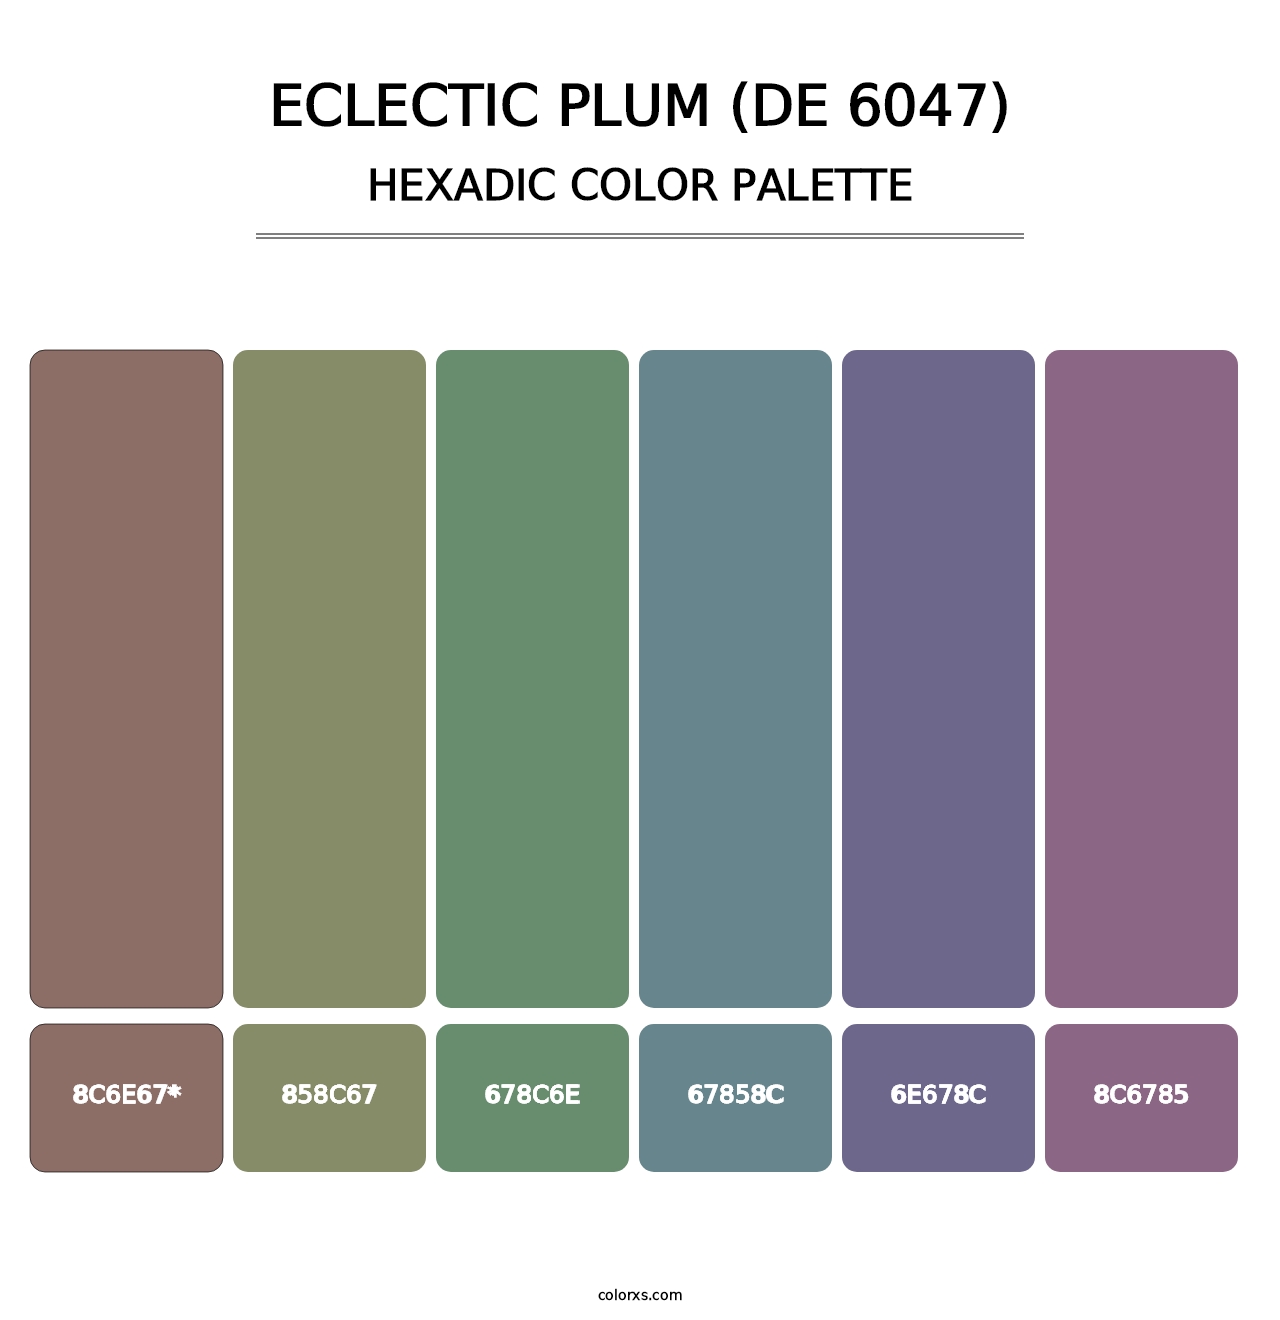 Eclectic Plum (DE 6047) - Hexadic Color Palette